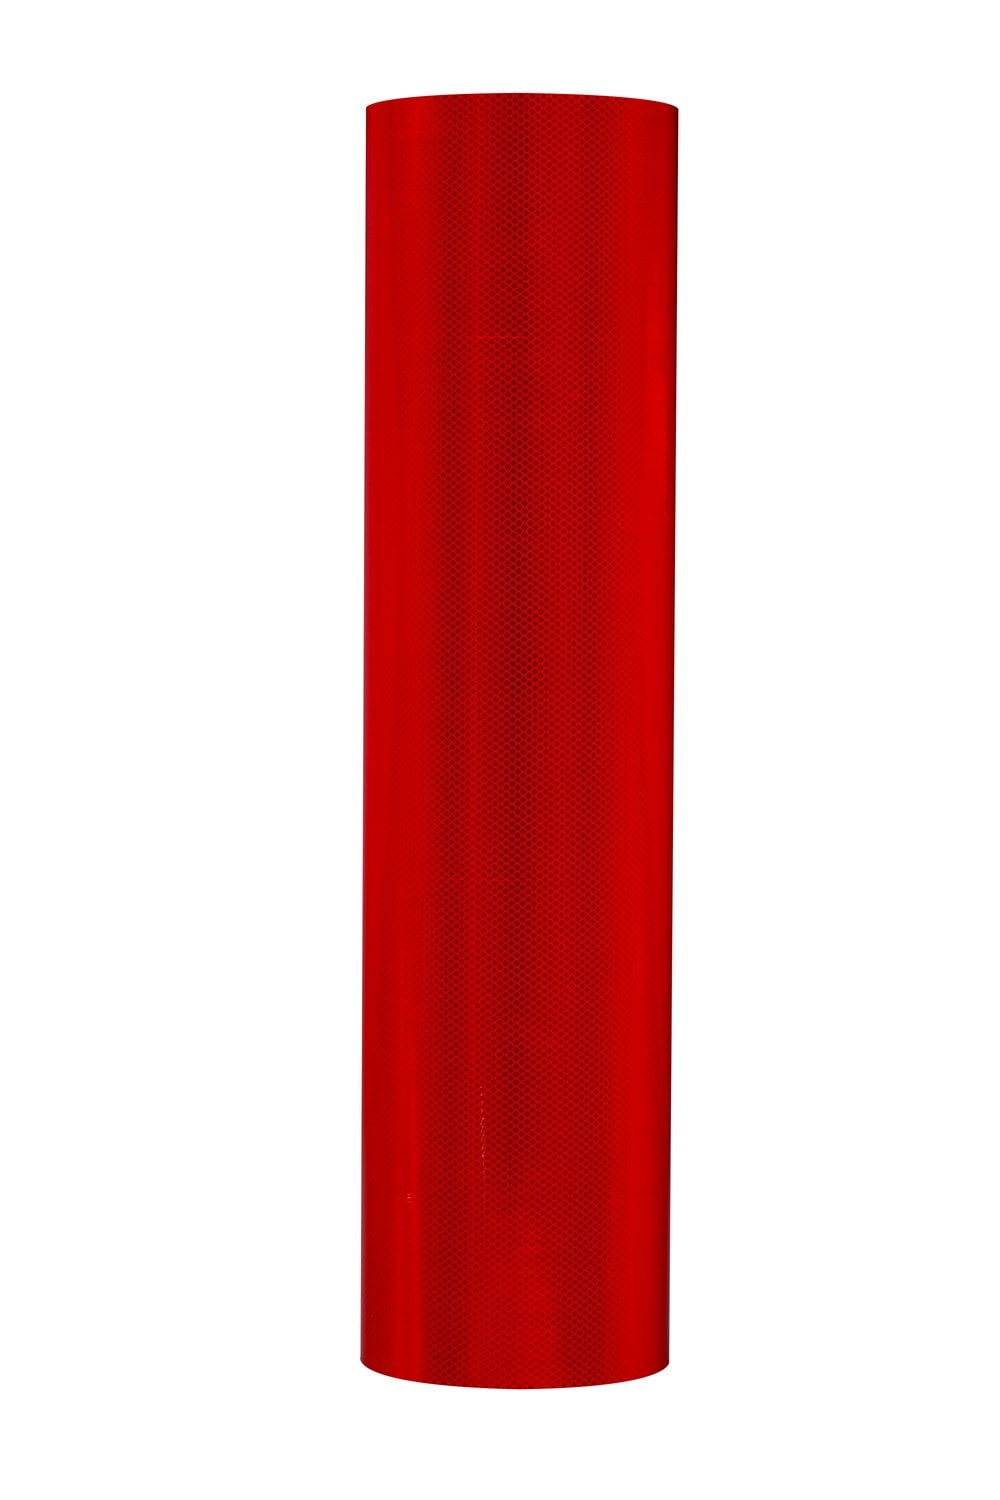 7000004909 - 3M Diamond Grade DG³ Reflective Sheeting 4092, Red, 24 in x 50 yd